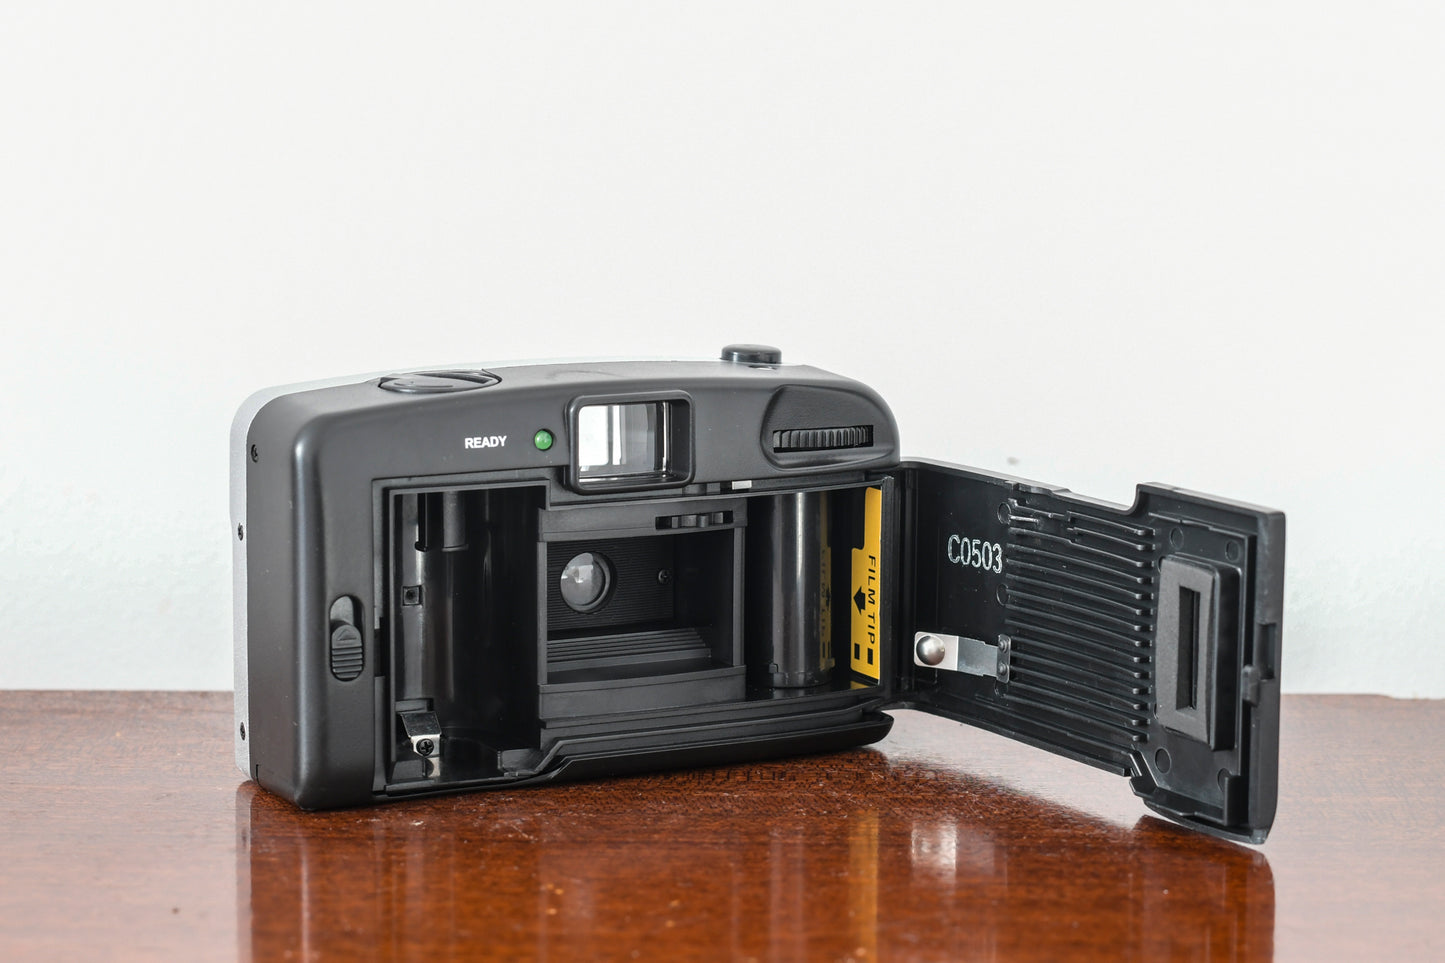 BRAND NEW Polaroid 170BV 35mm Film Camera Kit